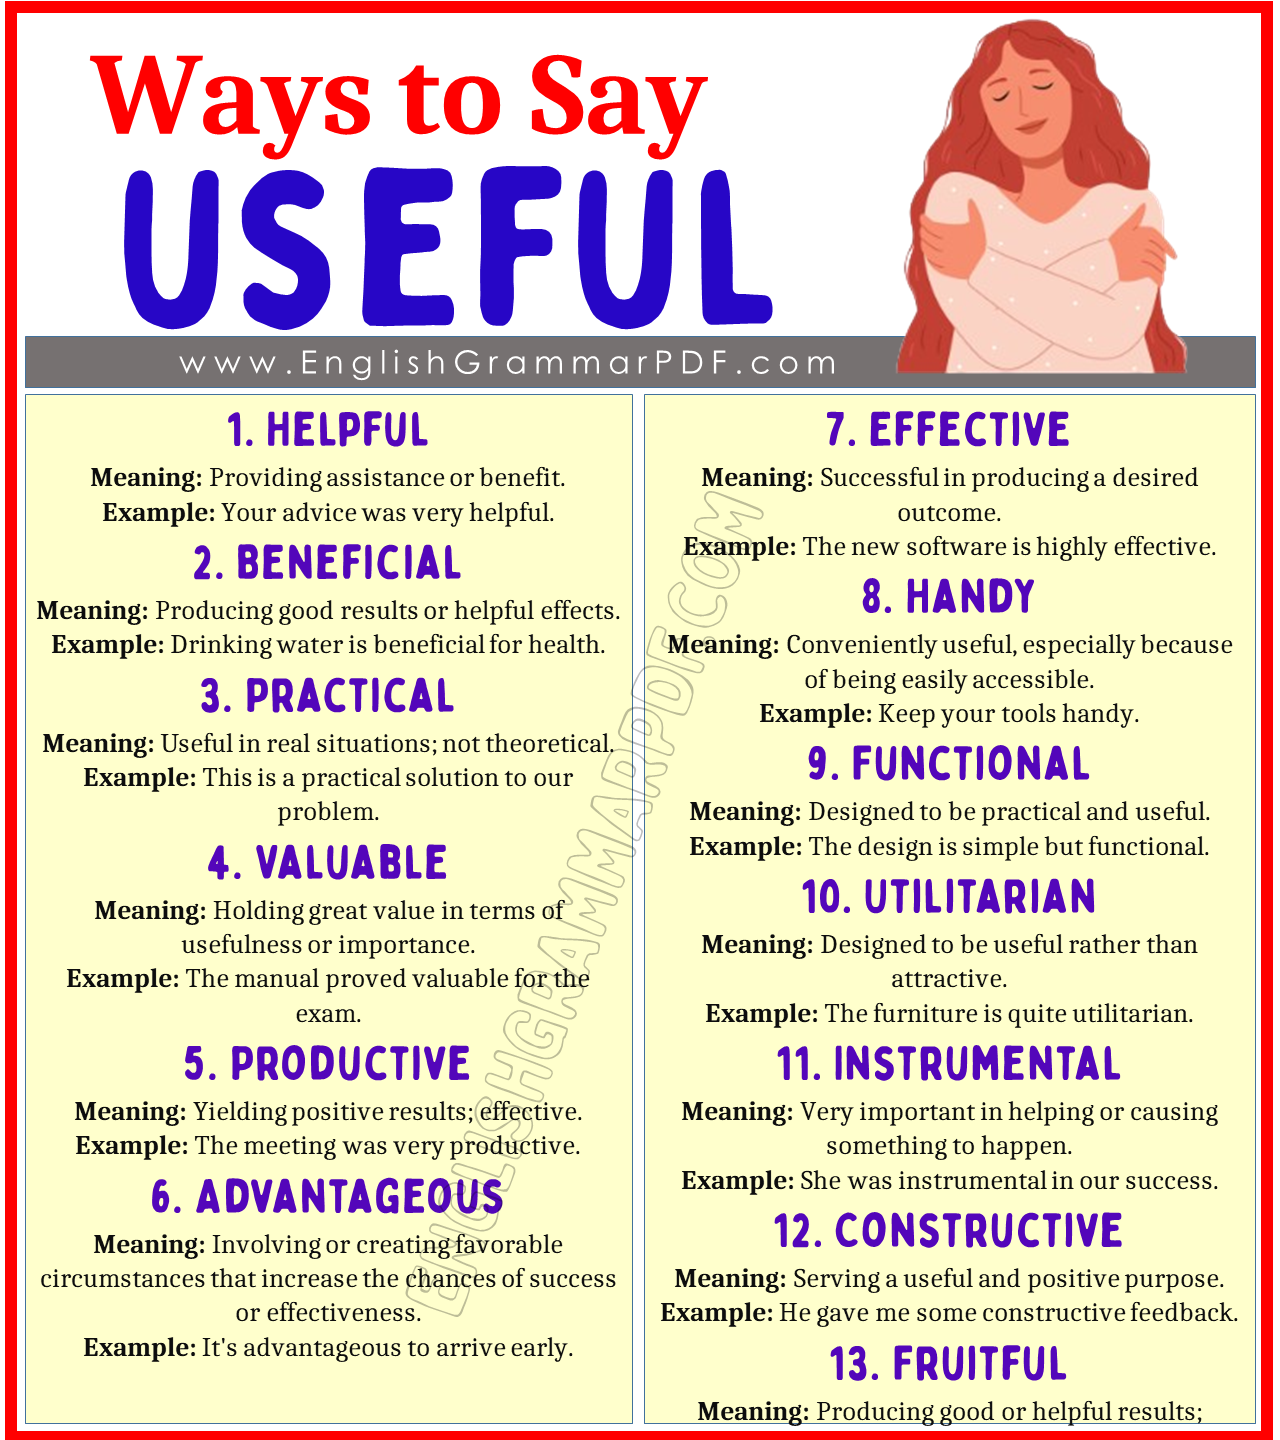 Ways to Say Useful 2